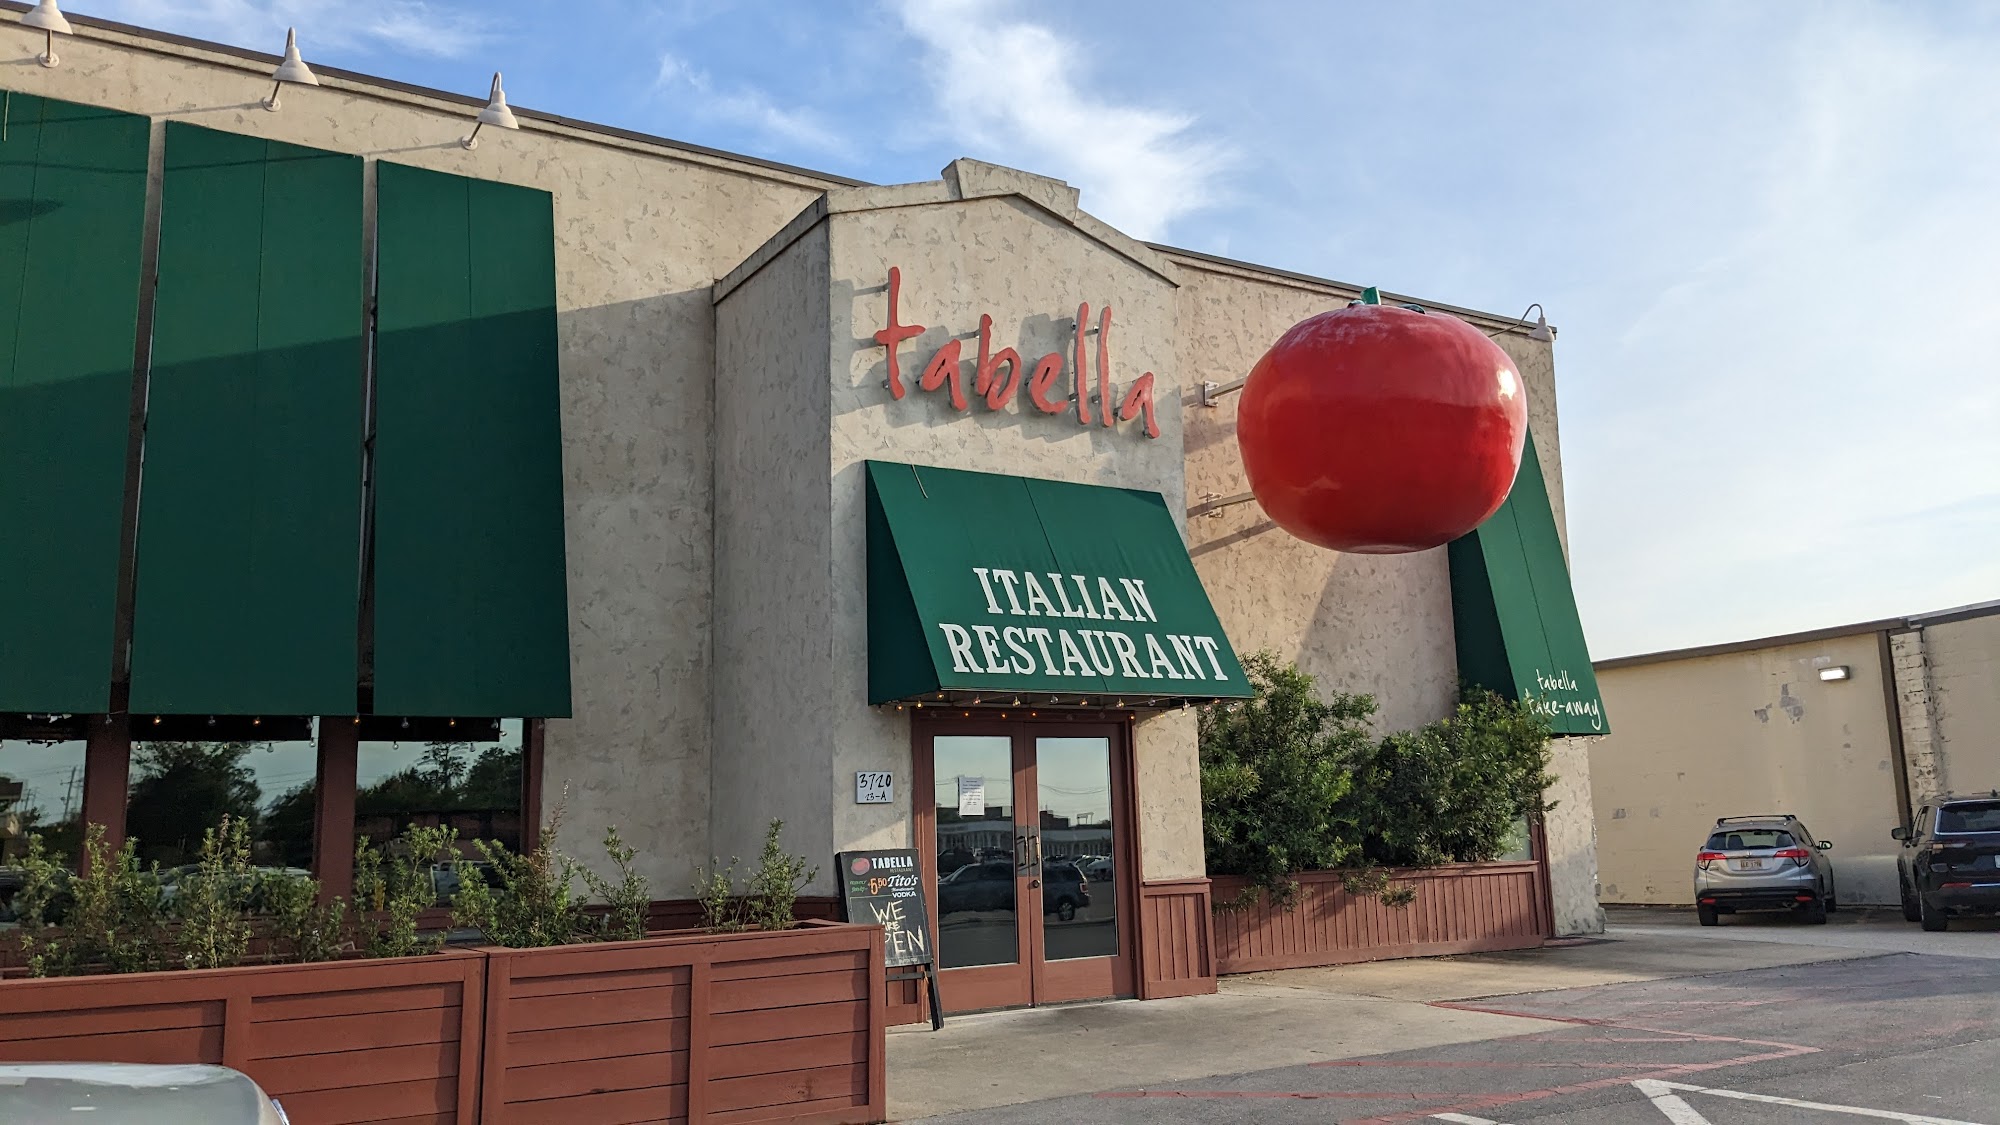 Tabella Italian Restaurant